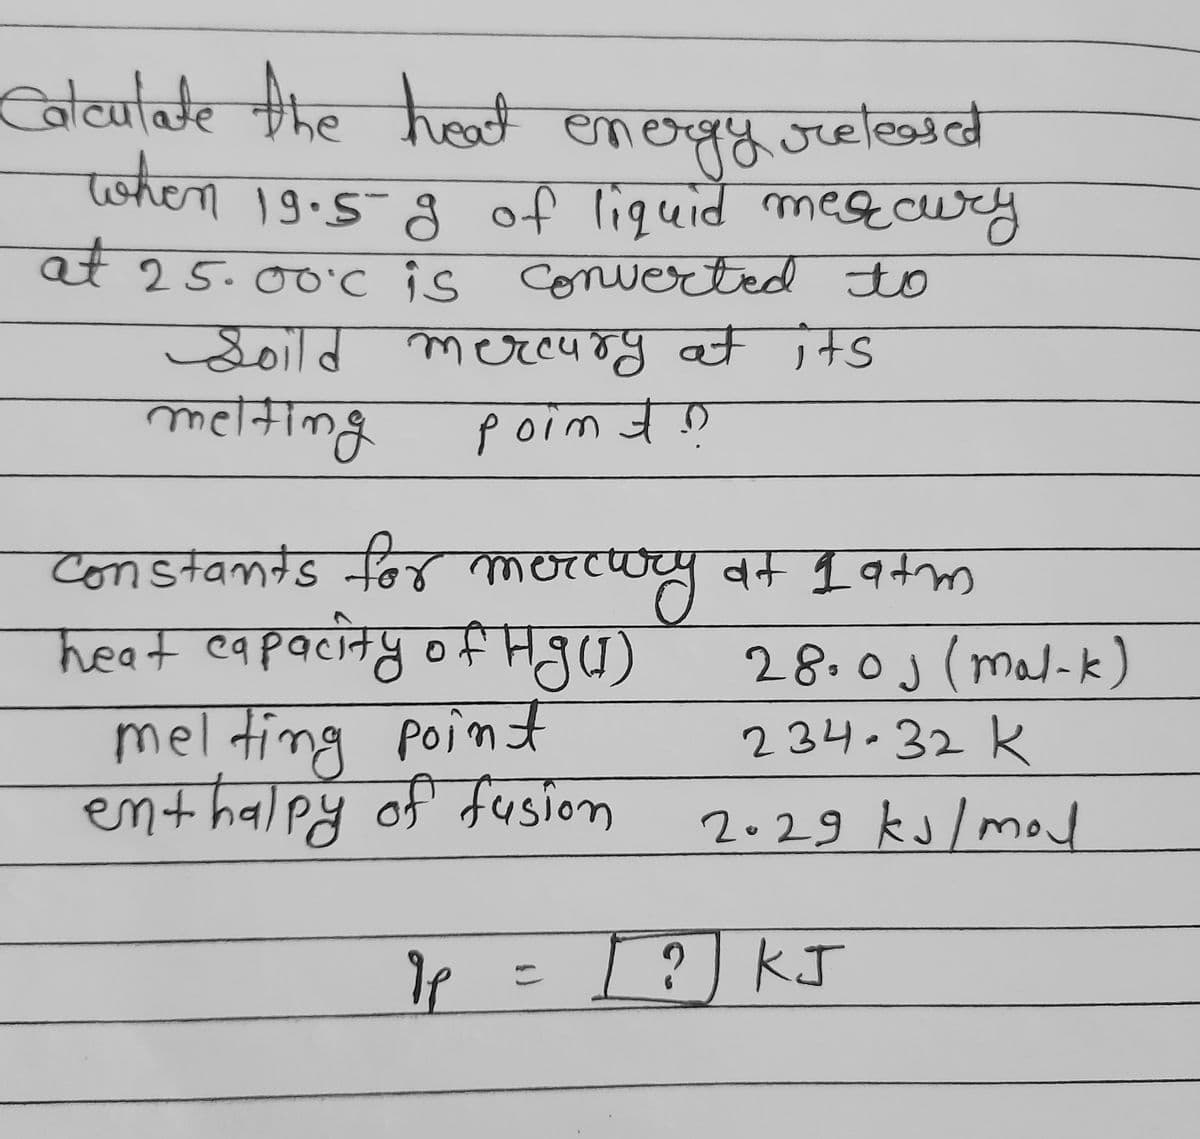 Calcutate the hot
emergy.oreleasd
of liquid megcury
at 25.00'c is conwerted to
उुनाब लण्ल्पम्पु वस 1मड
१४ज्ज
twhen 19.5-8
एकंजा
Soild
melting
P ०rm बेछ
uy dt 1atm
28.0j (mal-k)
234.32 K
constands for merco
heat eapacity ofHgu)
melti
ng poin f
enthalpy of fusion
2.29 ks/mod
[ ? KJ
